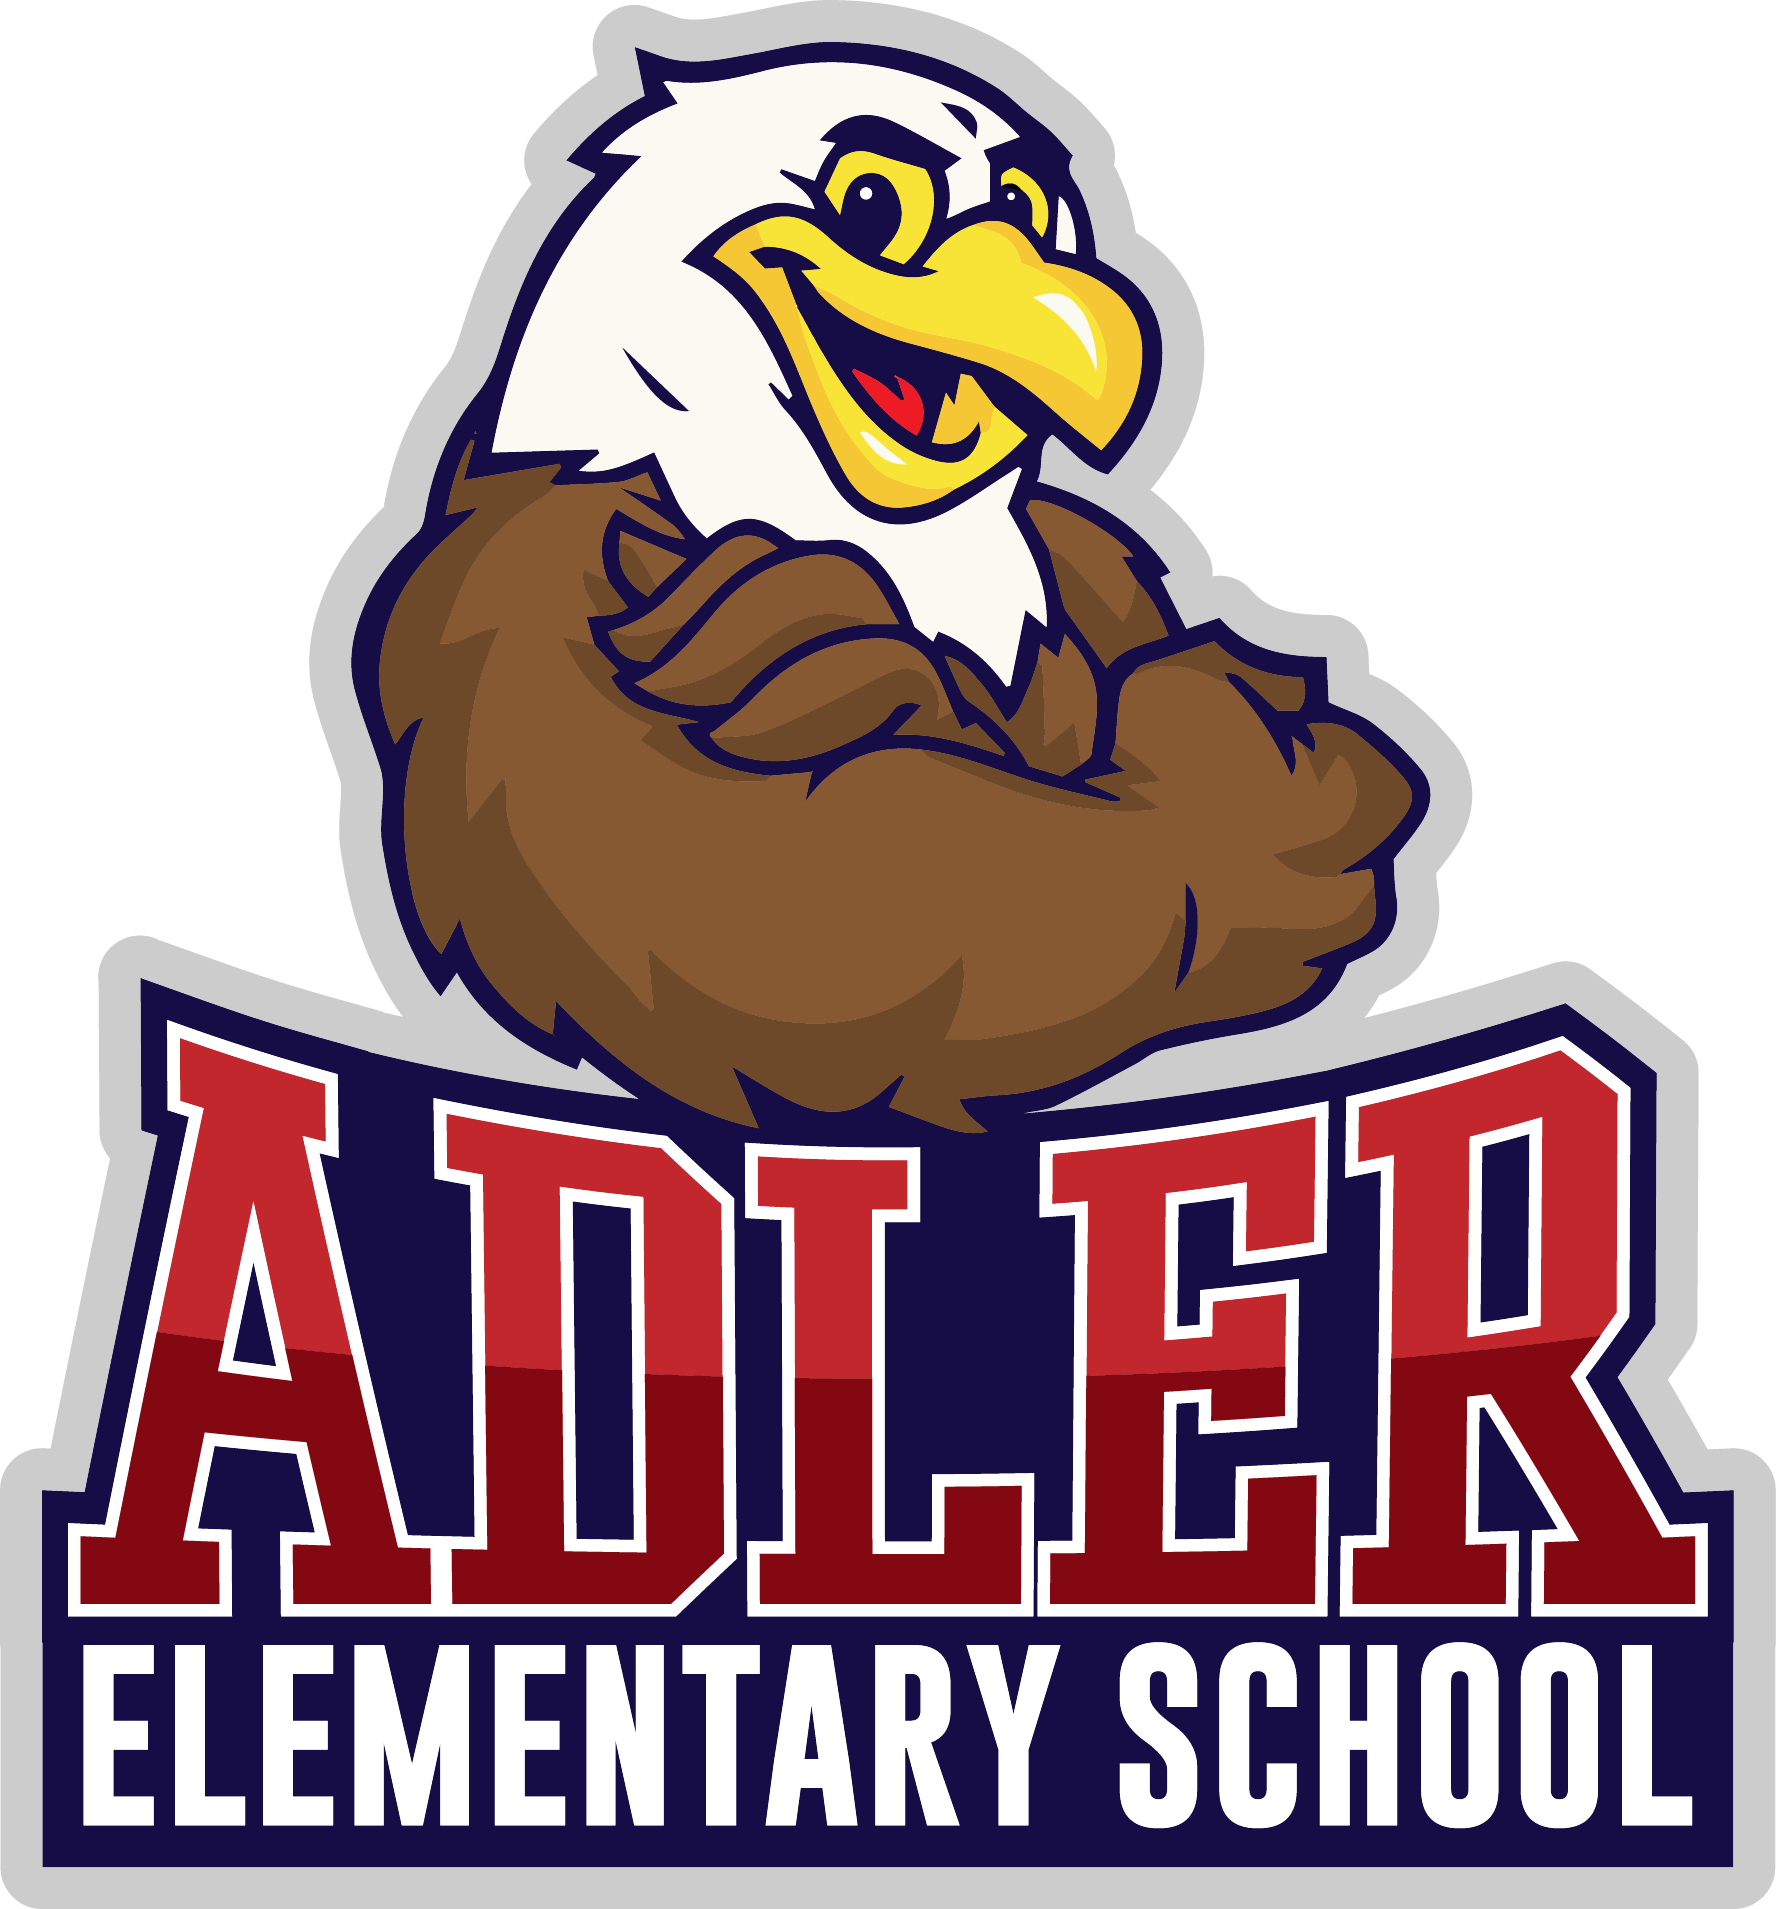 Adler Elementary School Elementary And K 8 Schools Schools